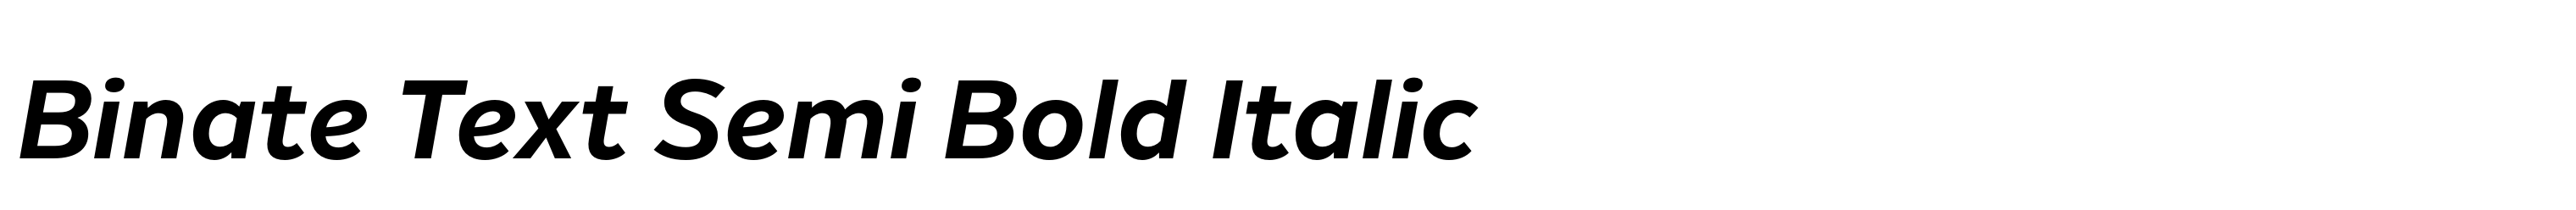 Binate Text Semi Bold Italic